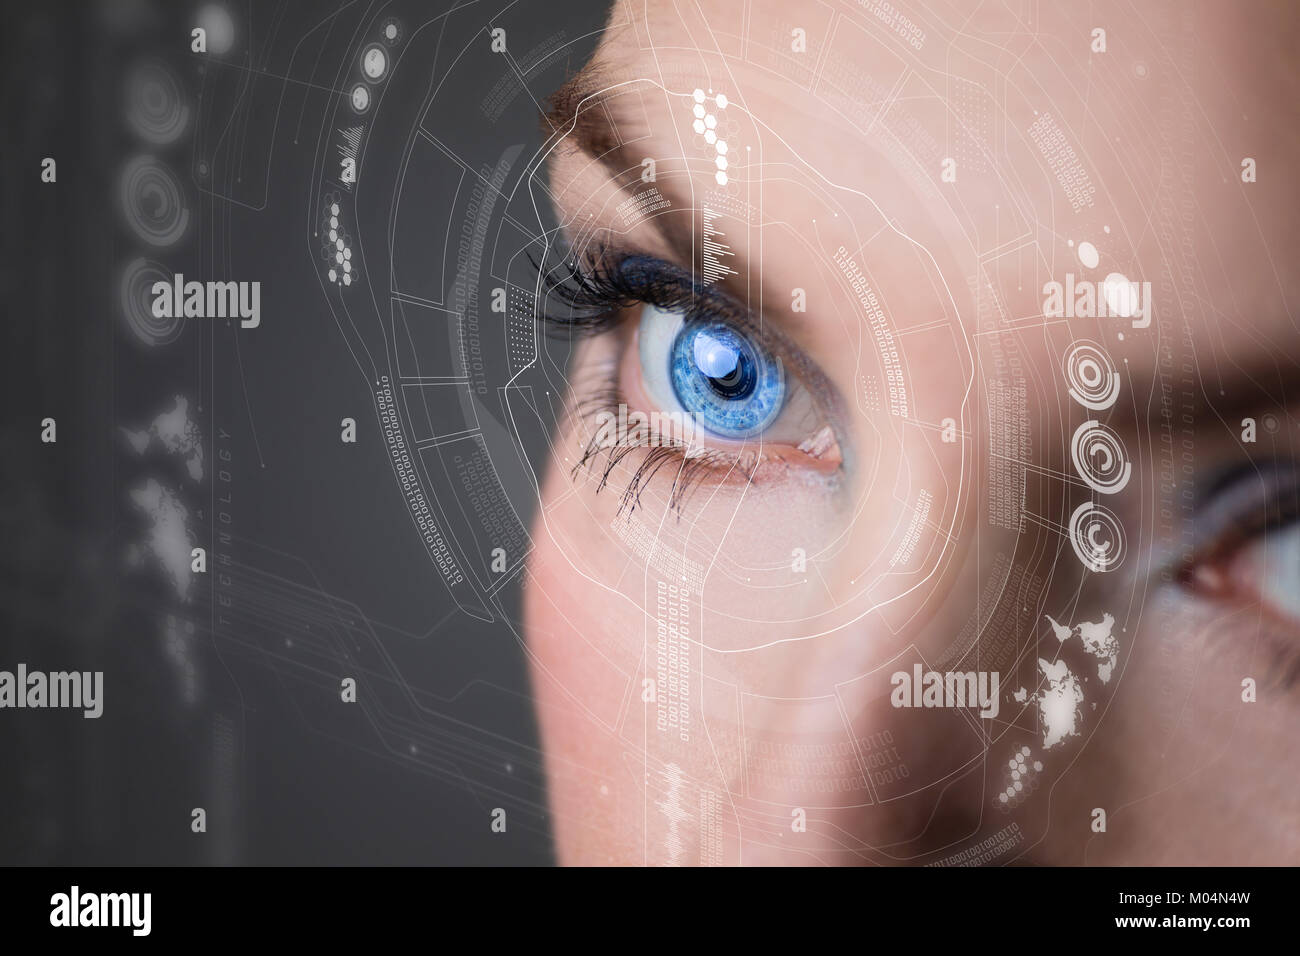 Die iriserkennung Konzept Smart Contact Lens. Mixed Media. Stockfoto